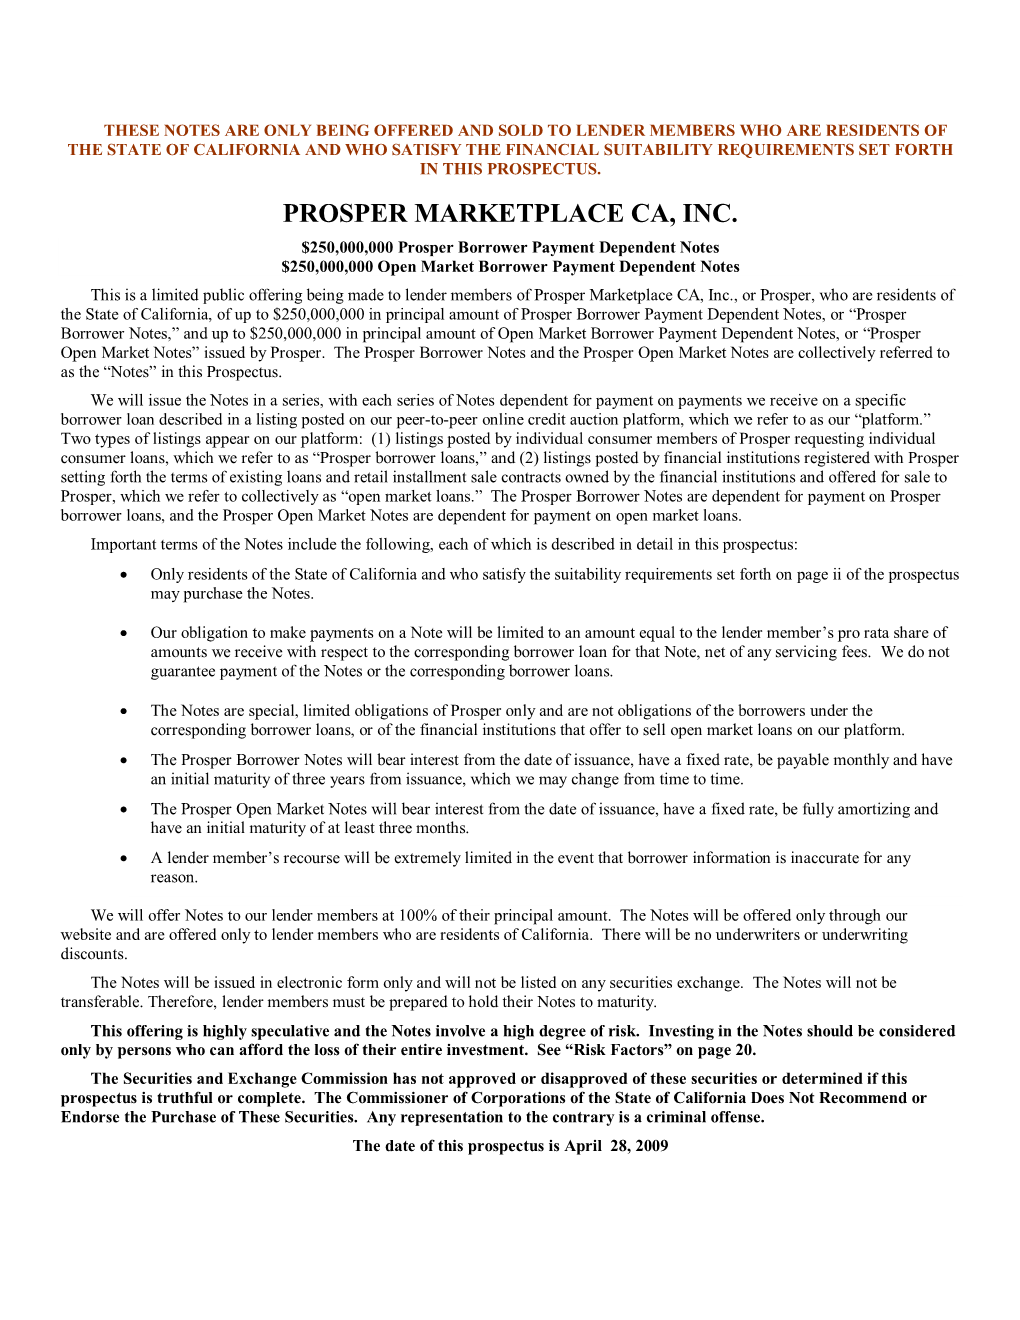 Prosper Marketplace Ca, Inc